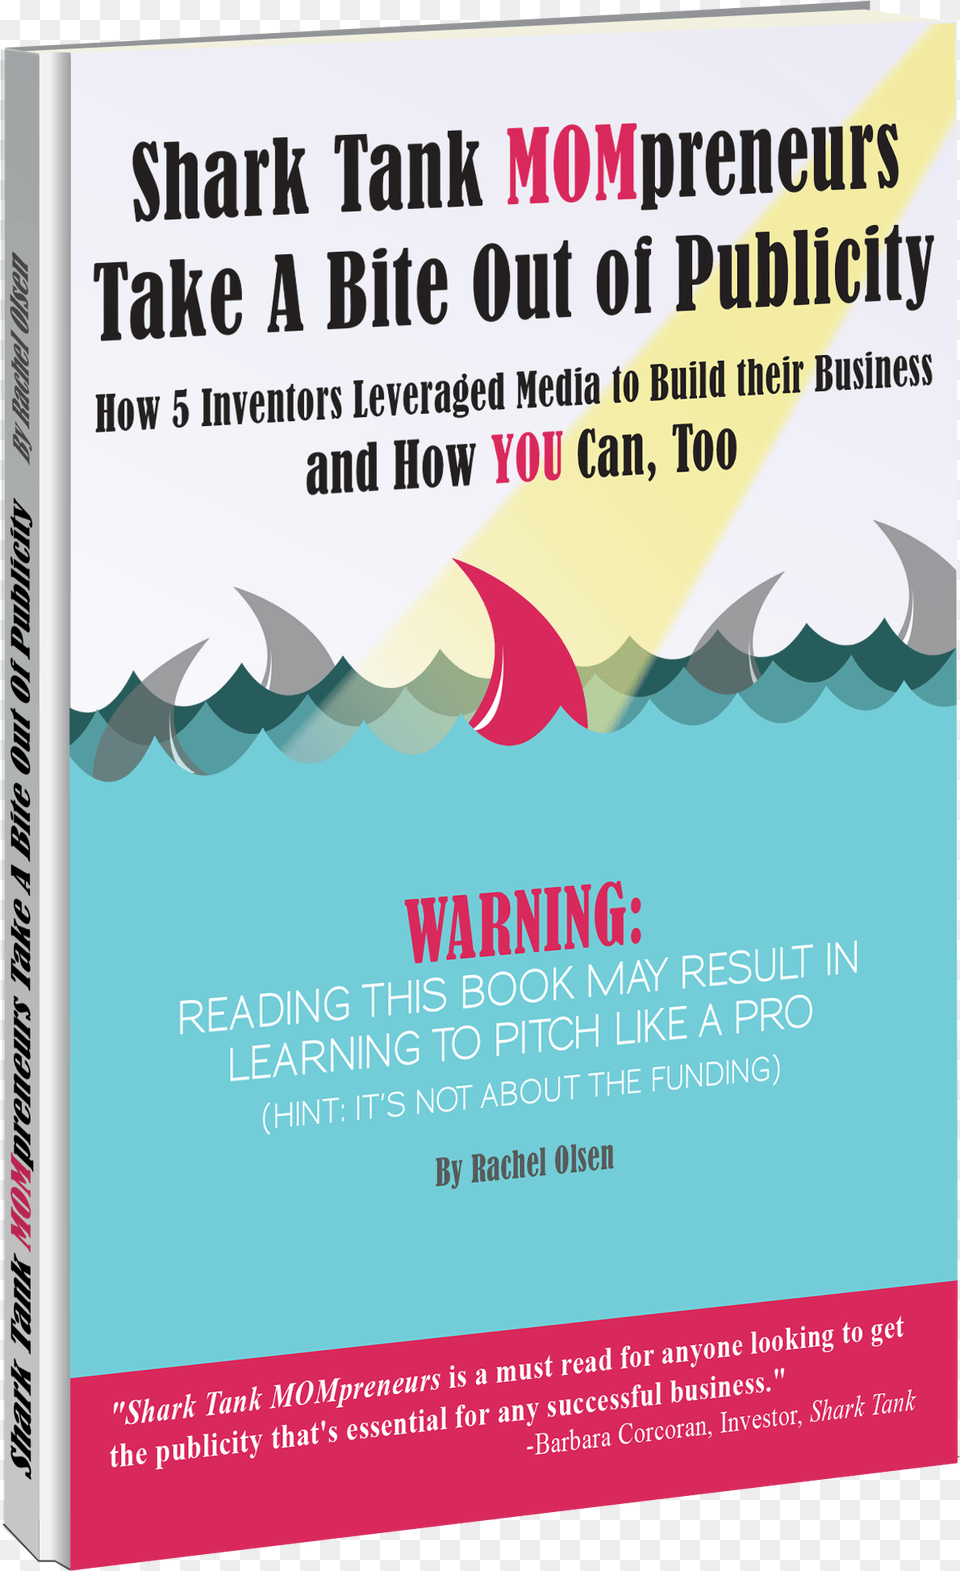 Shark Tank Mompreneurs Book Cover Shark Tank Mompreneurs How 5 Inventors Lveraged Media, Advertisement, Poster, Publication Png